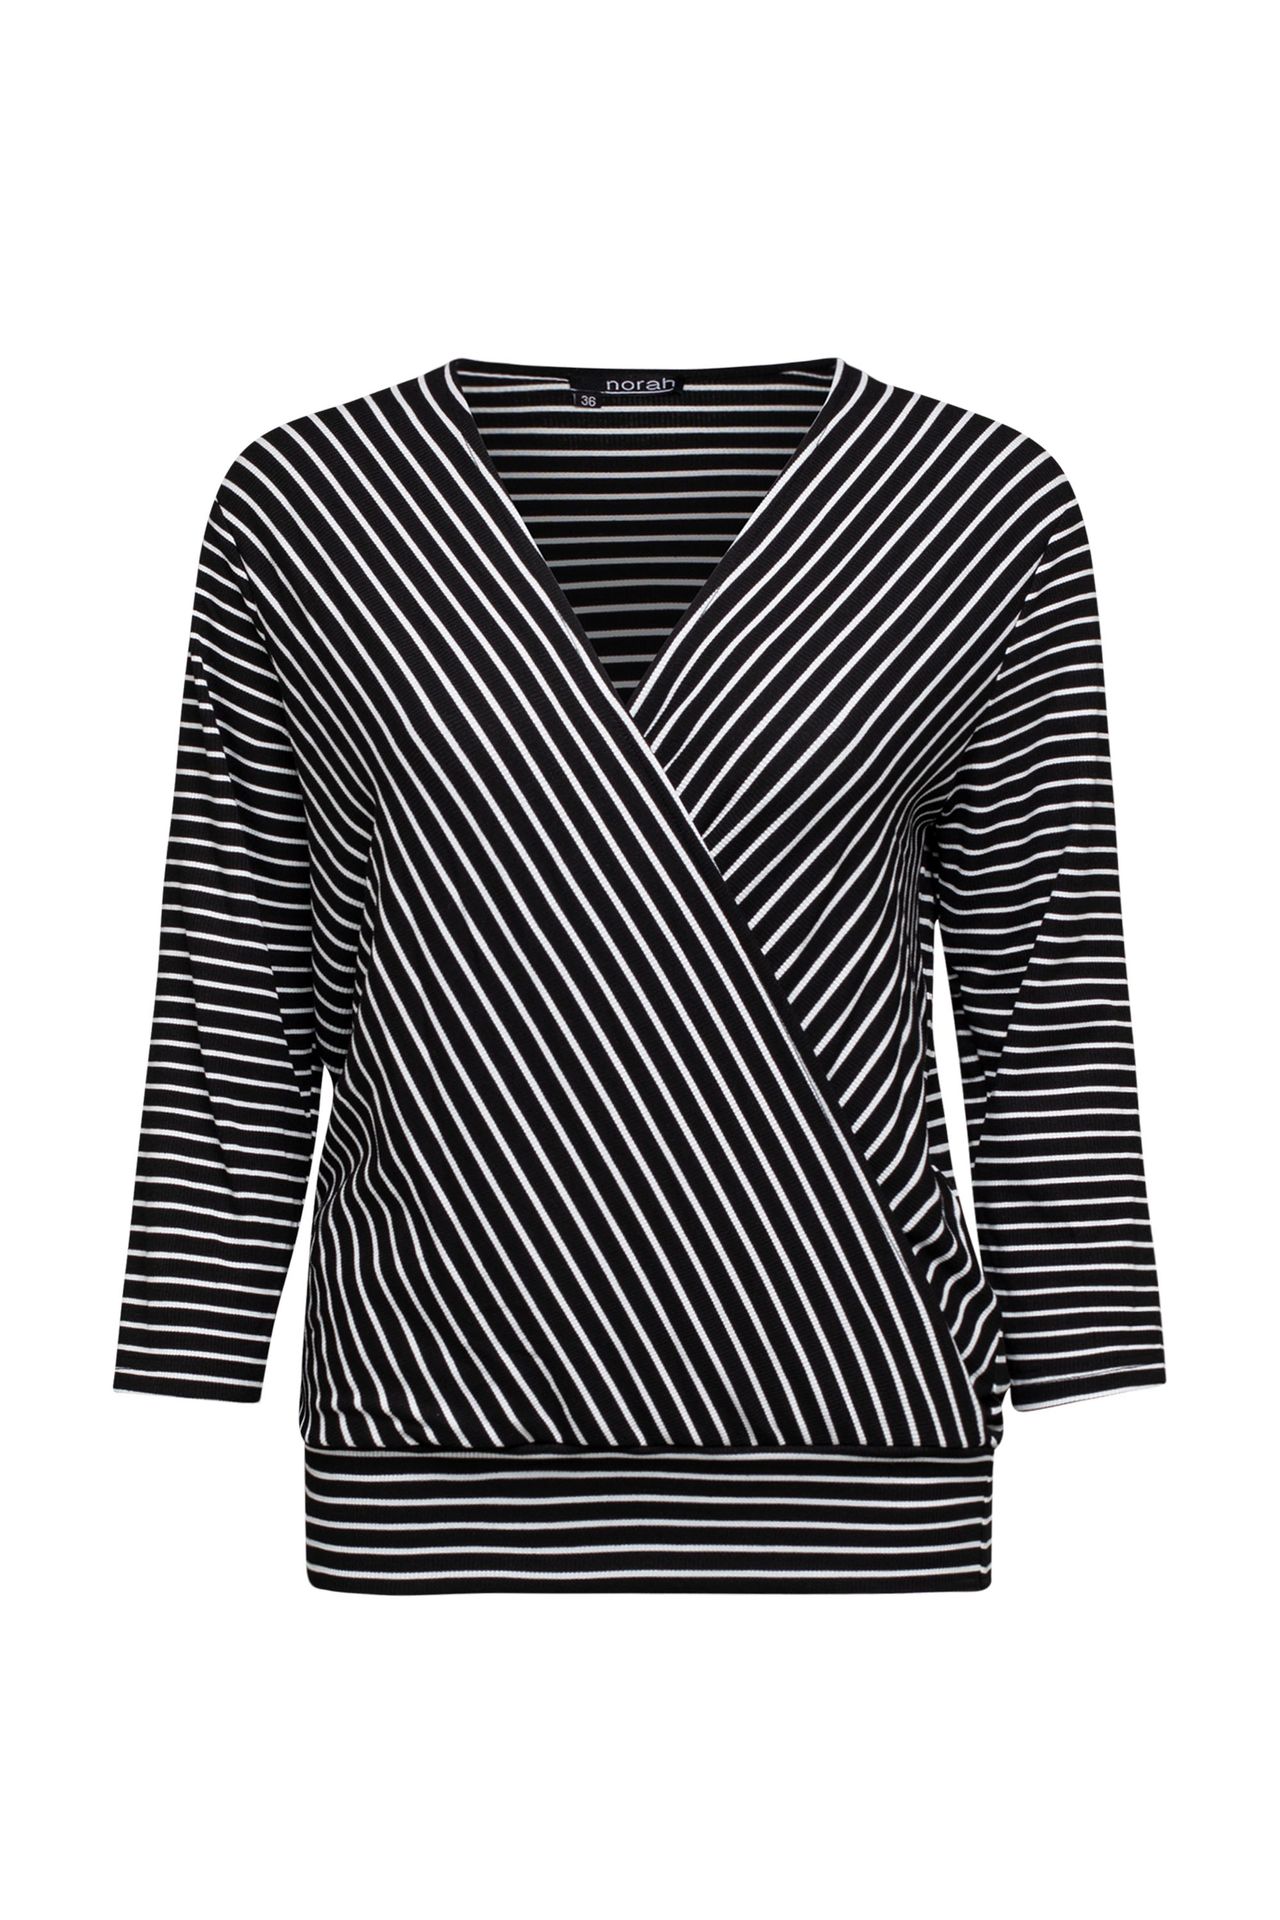 Norah Shirt zwart wit gestreept black/white 212449-031